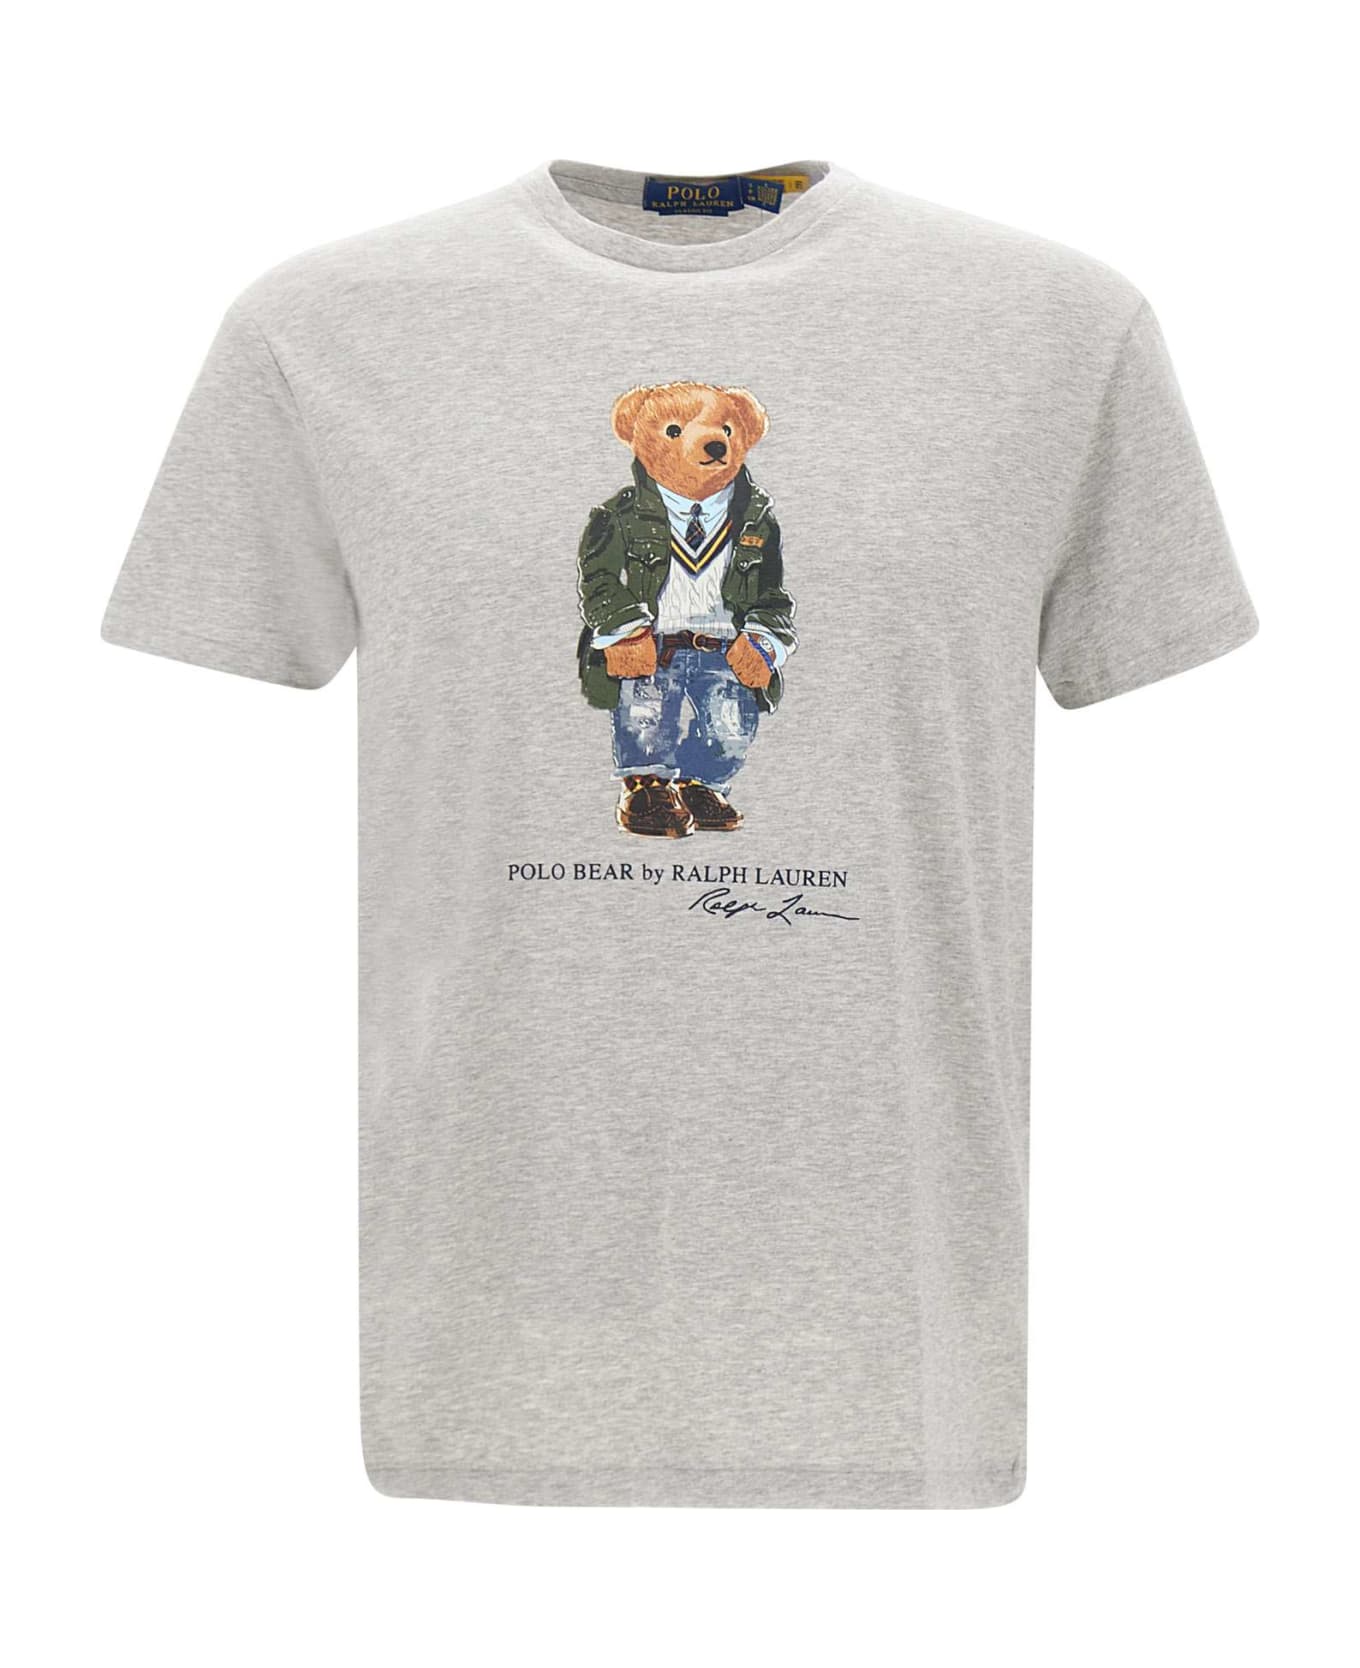 Polo Ralph Lauren "classics" Cotton T-shirt - GREY